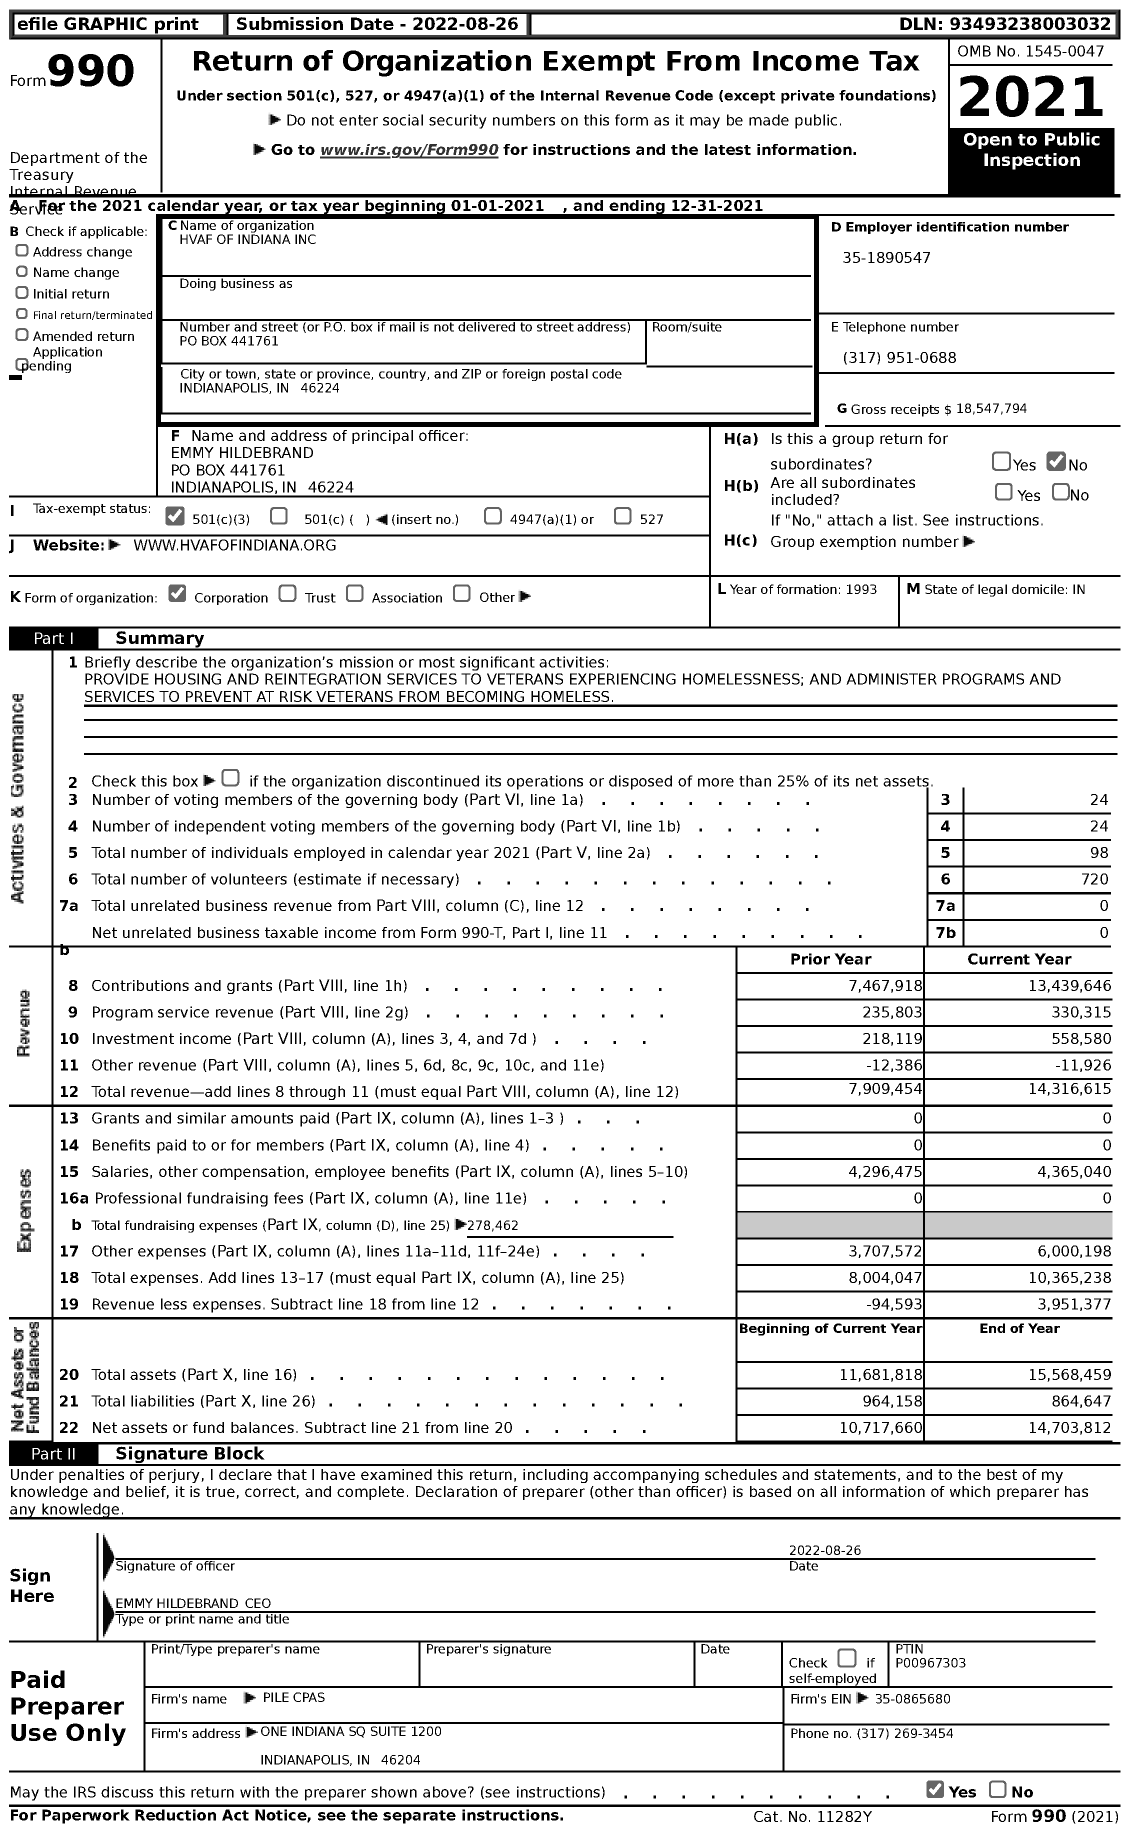 Image of first page of 2021 Form 990 for Hoosier Veterans Assistance Foundation of Indiana (HVAF)